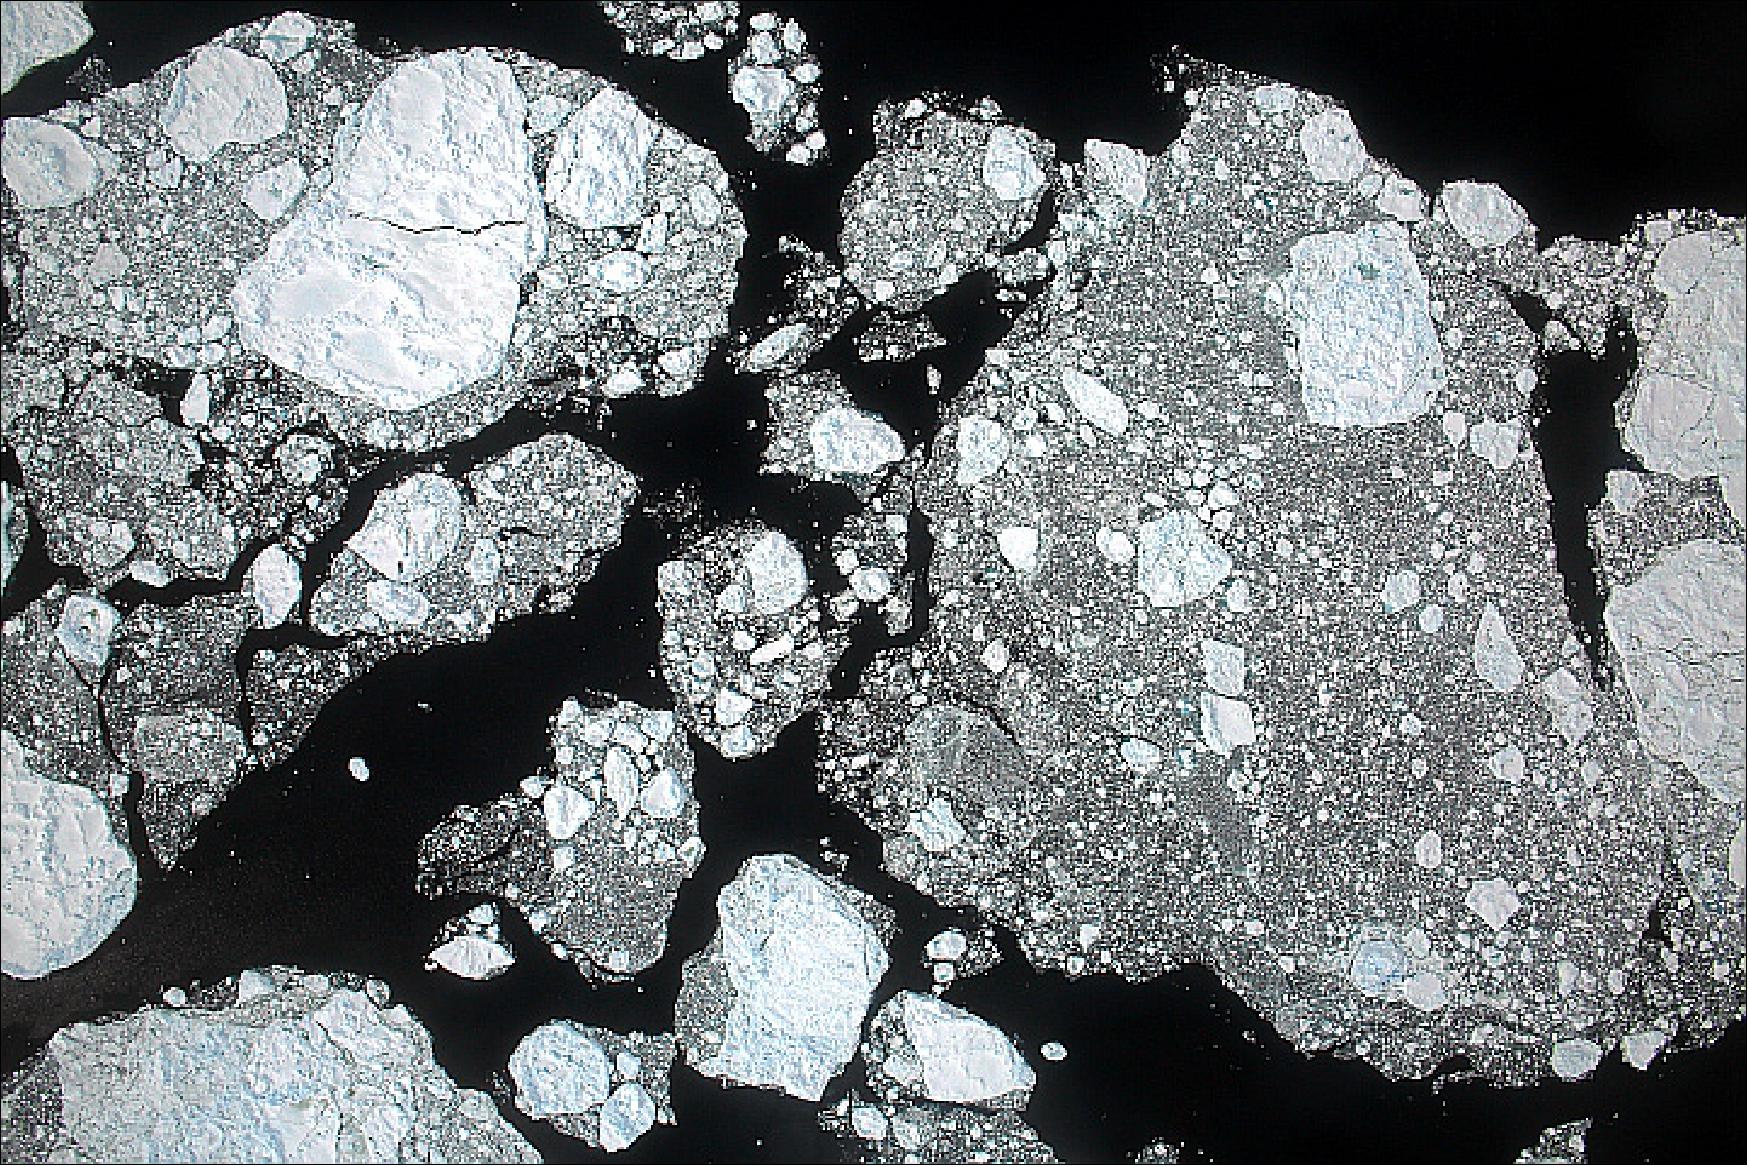 Figure 81: Sea ice near the Larsen C Ice Shelf (image credit: NASA/Digital Mapping System — image 4)